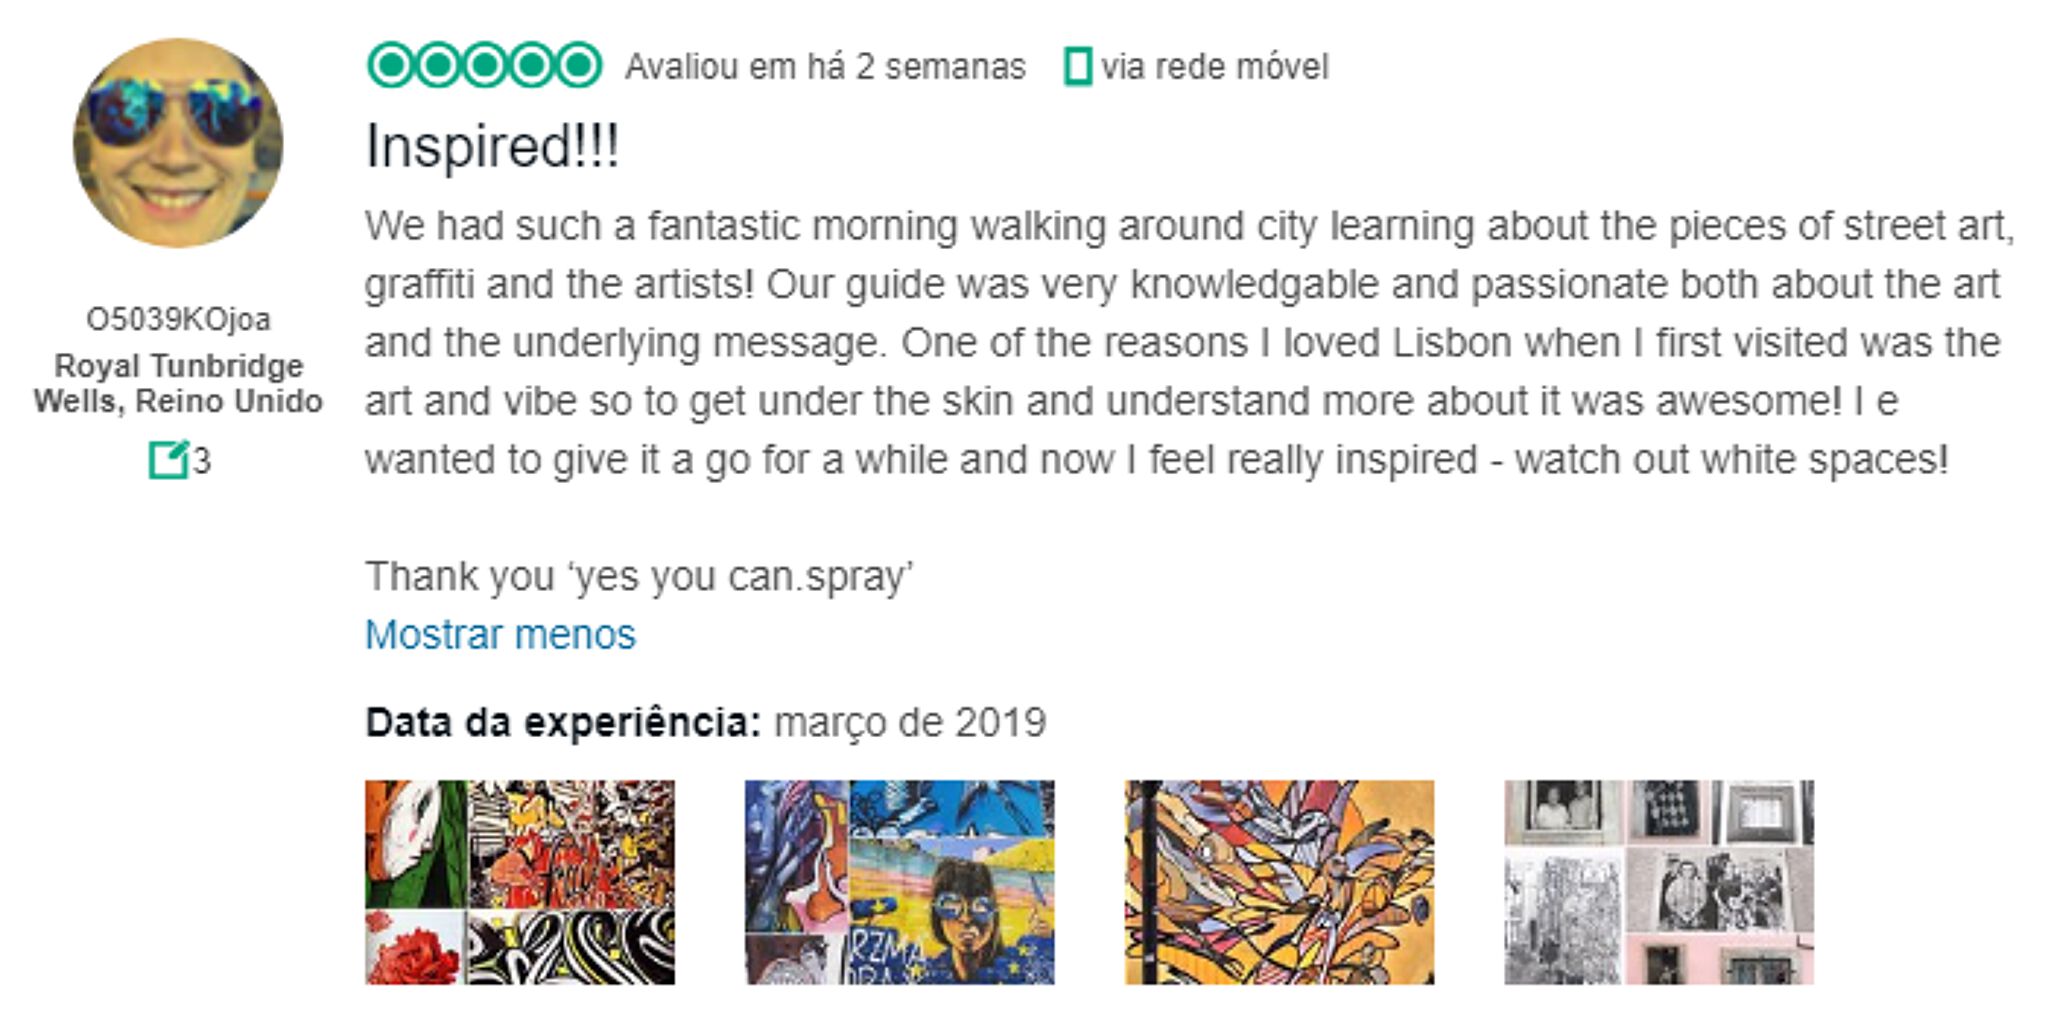 &mdash;LISBON STREET ART TOURS (recommended by Street Art Cities)